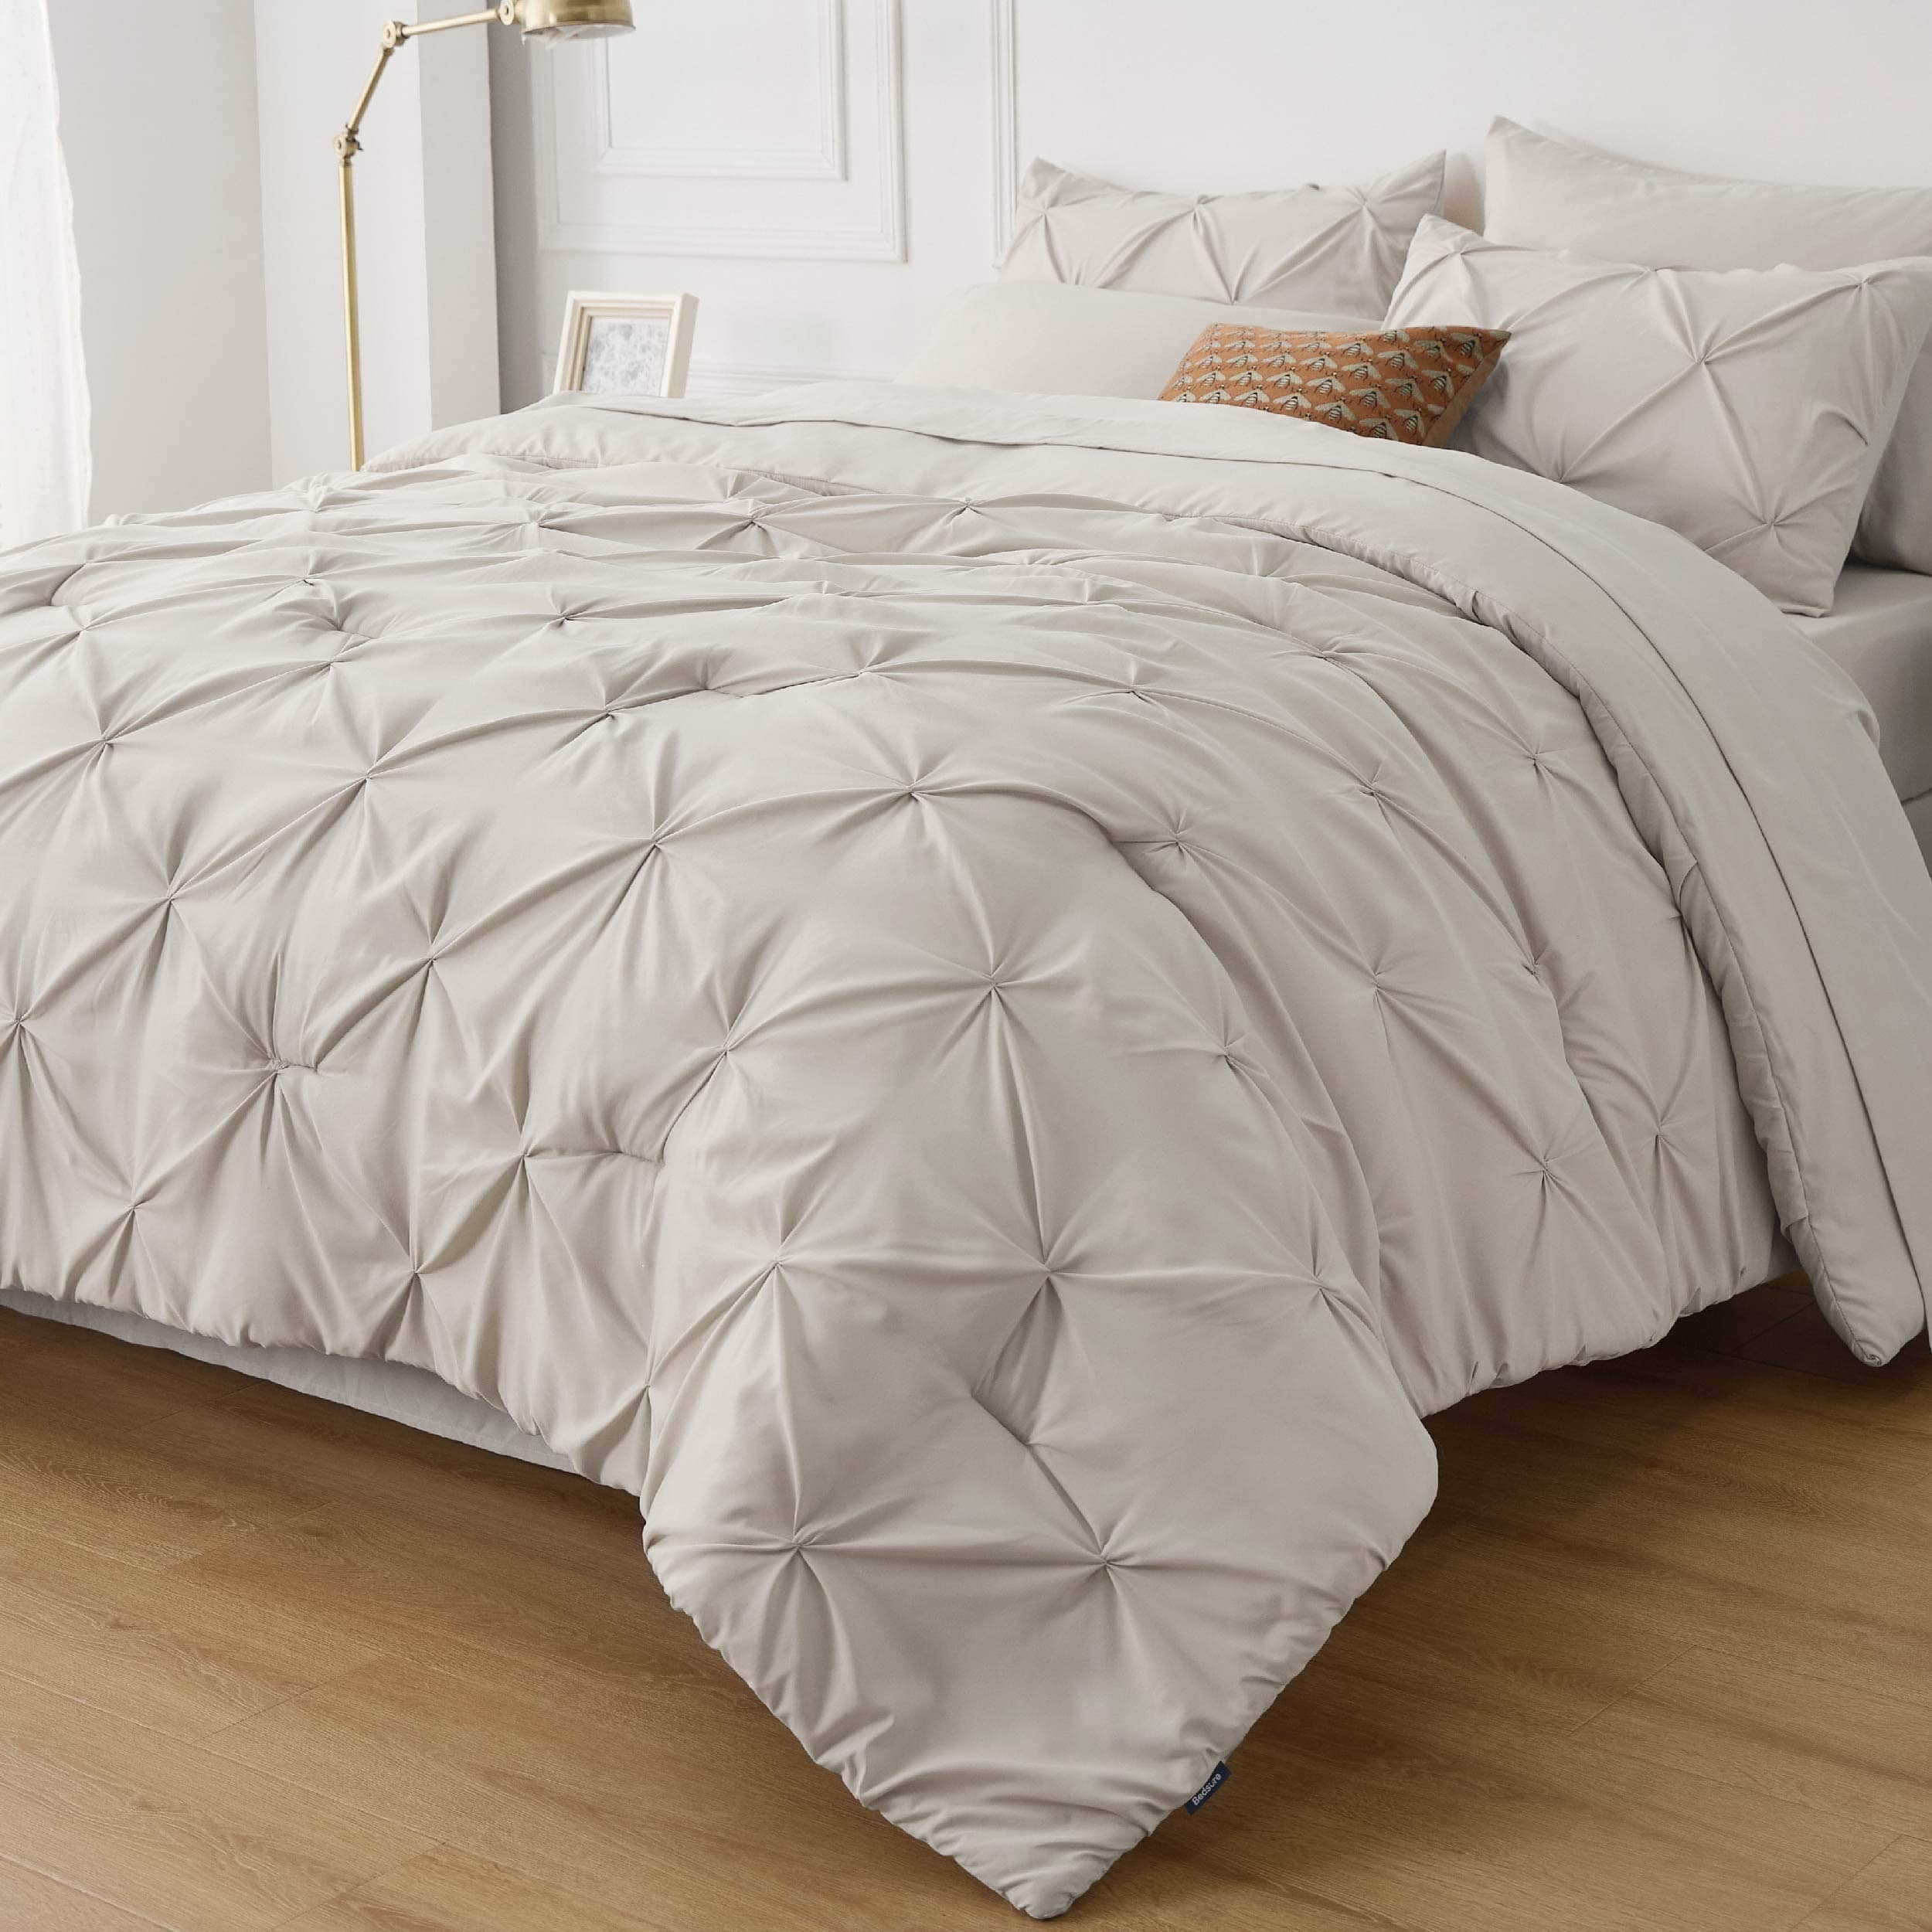 Bedsure Queen Comforter Set - Sage Green Comforter, Cute Floral Bedding  Comforter Sets, 3 Pieces, 1 Soft Reversible Botanical Flowers Comforter and  2